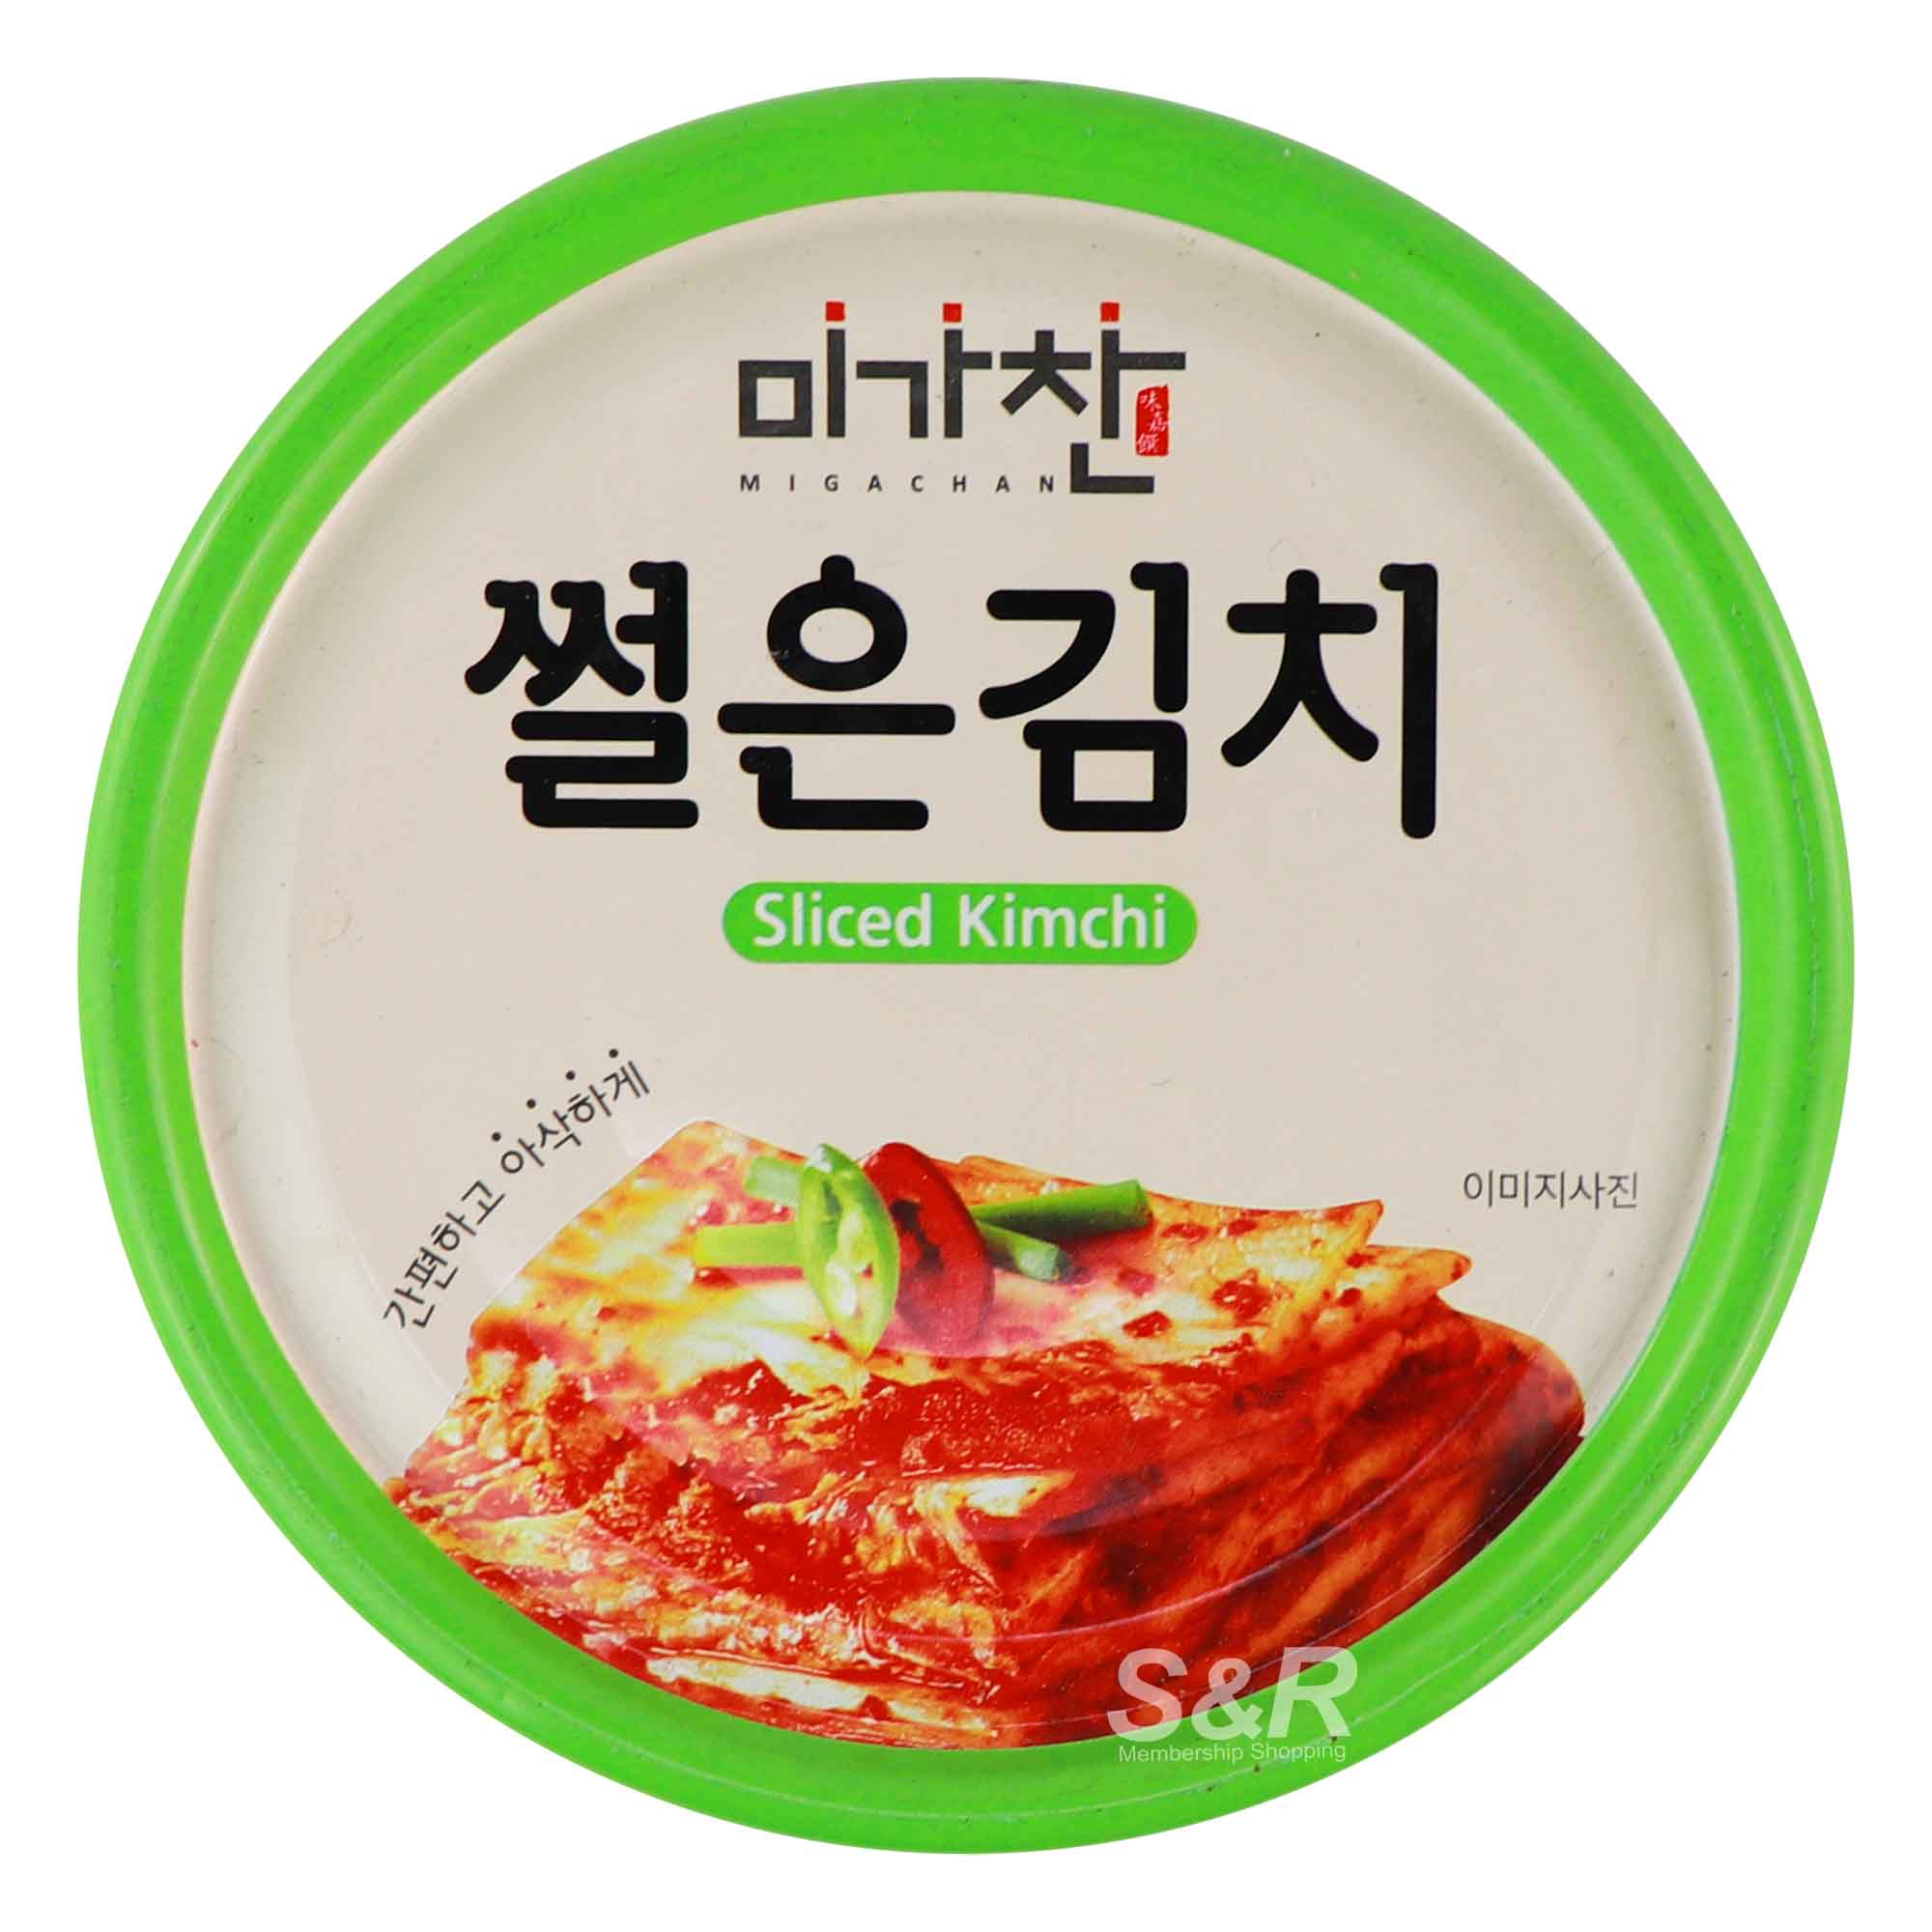 Migachan Sliced Kimchi 160g